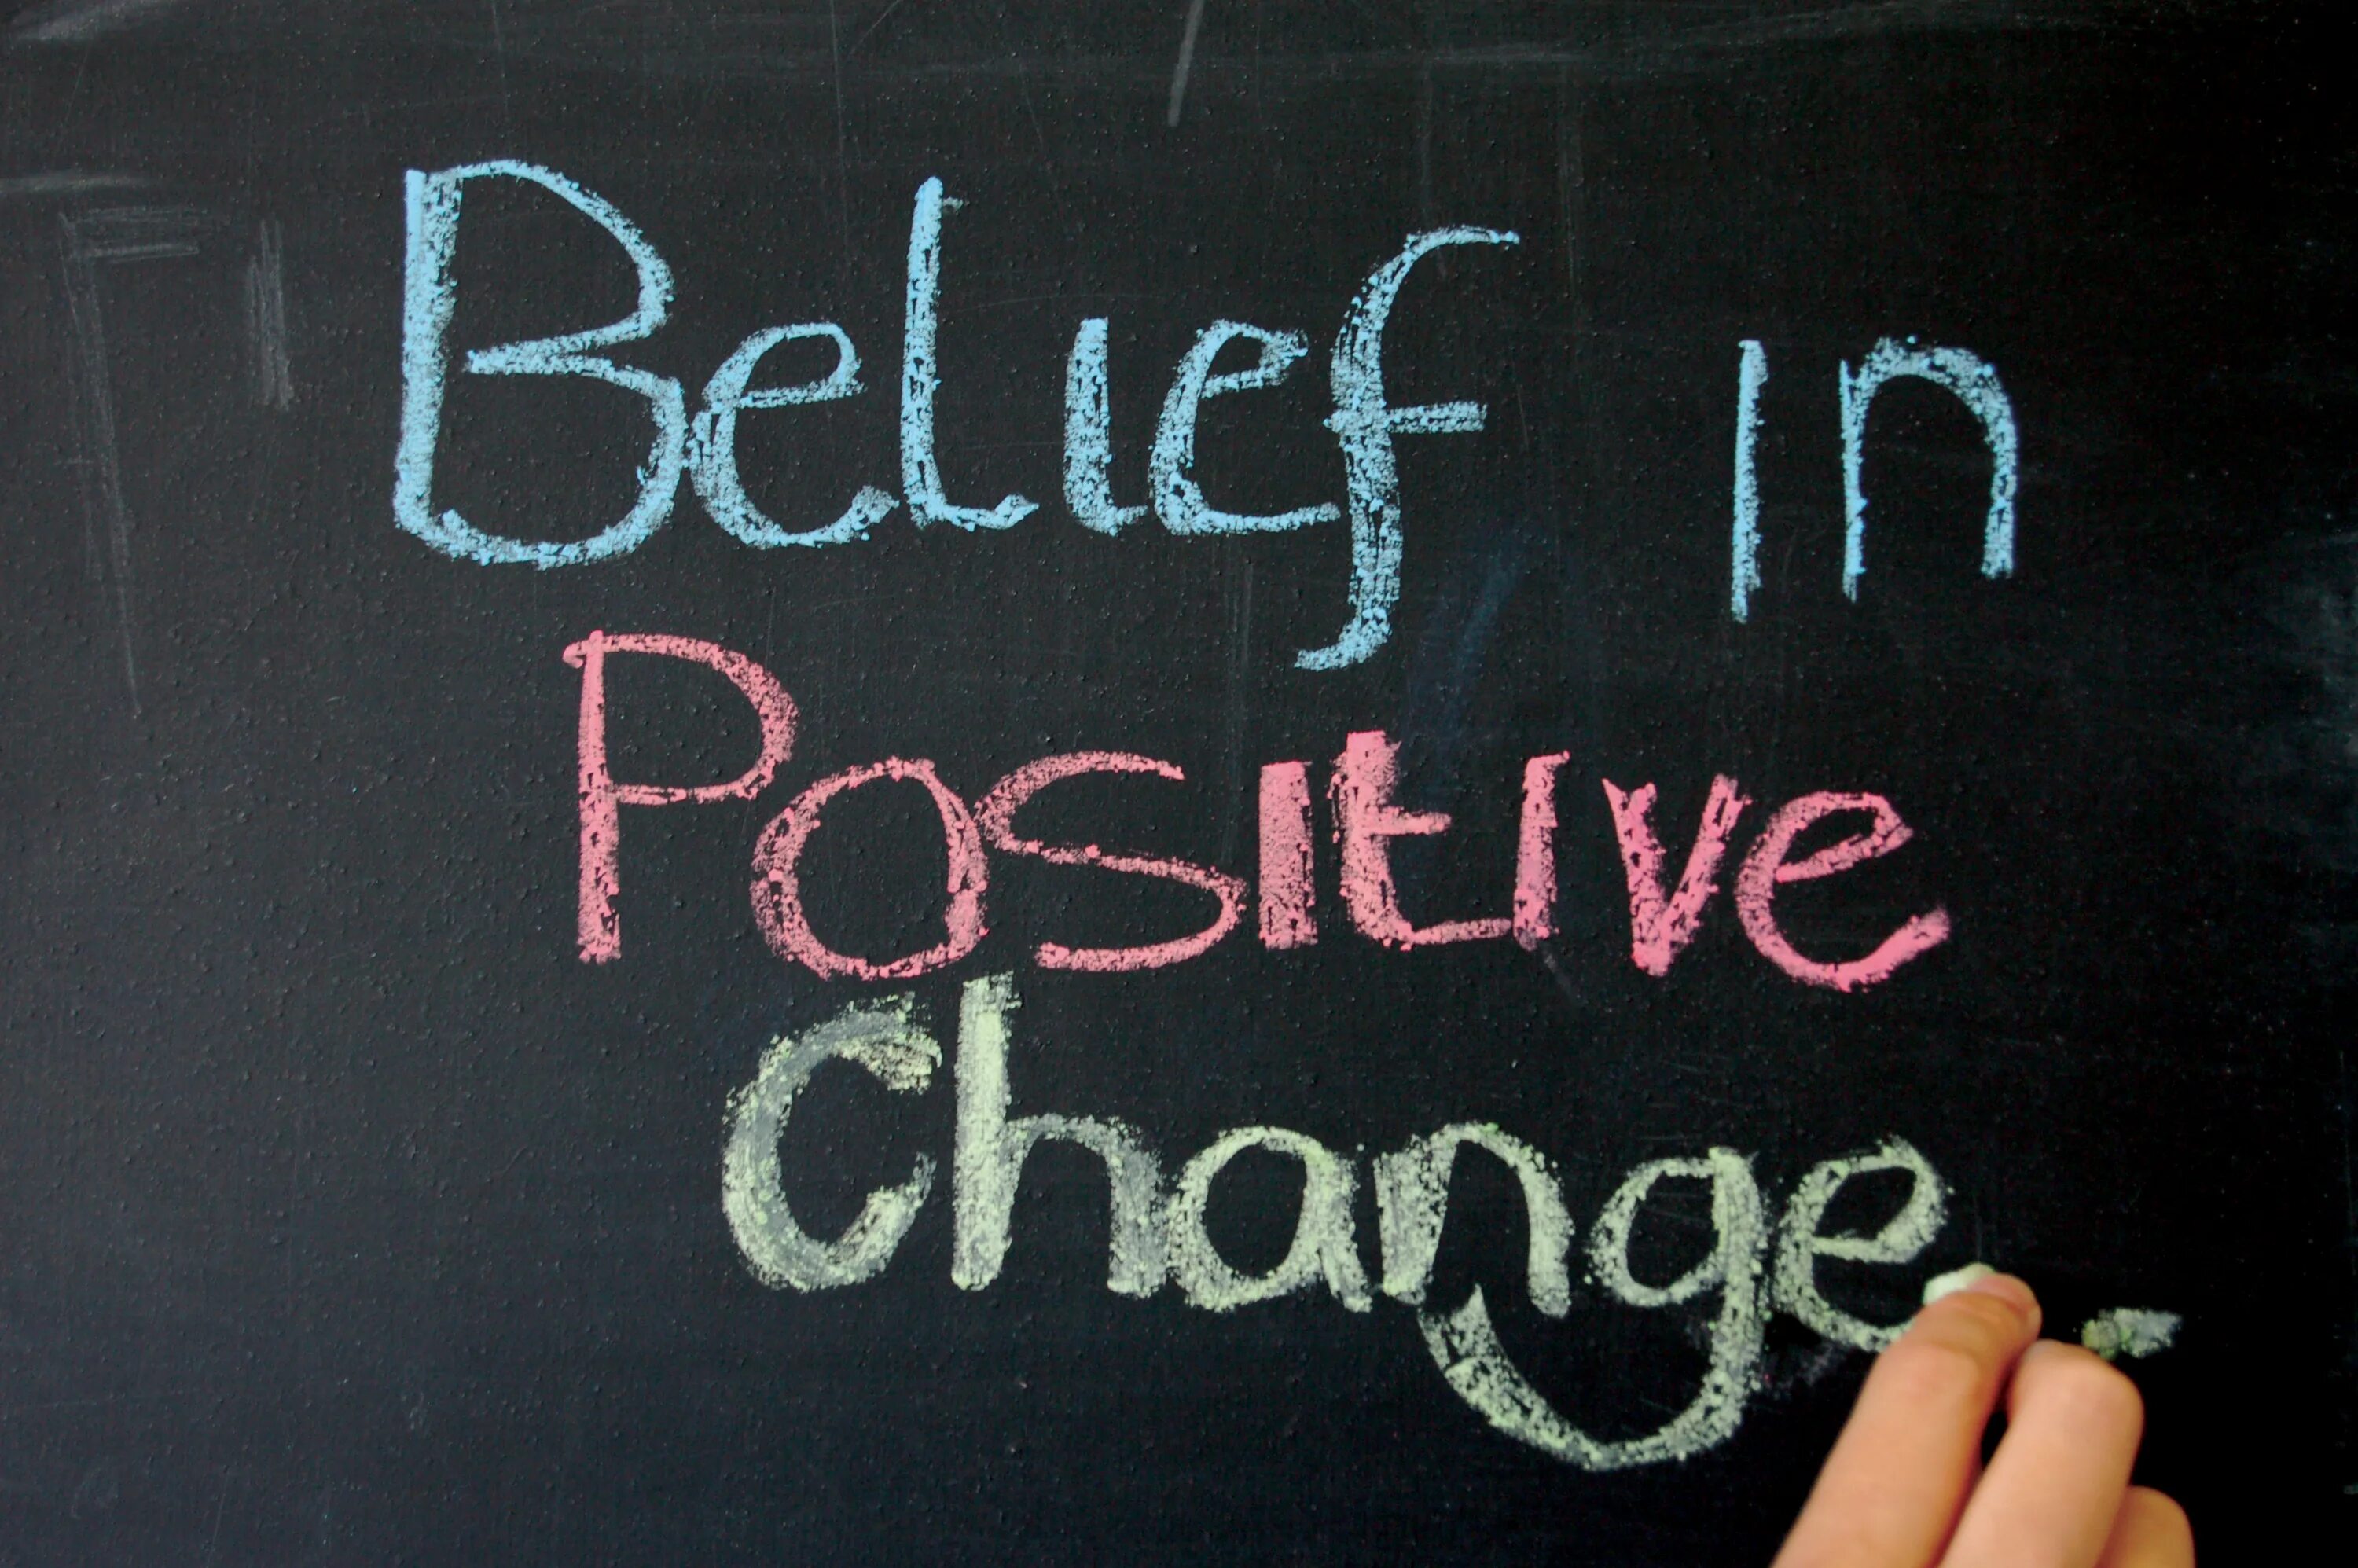 Starting september. Belief. Positive change. Positive Mindset. Positive Mindset not text in image.